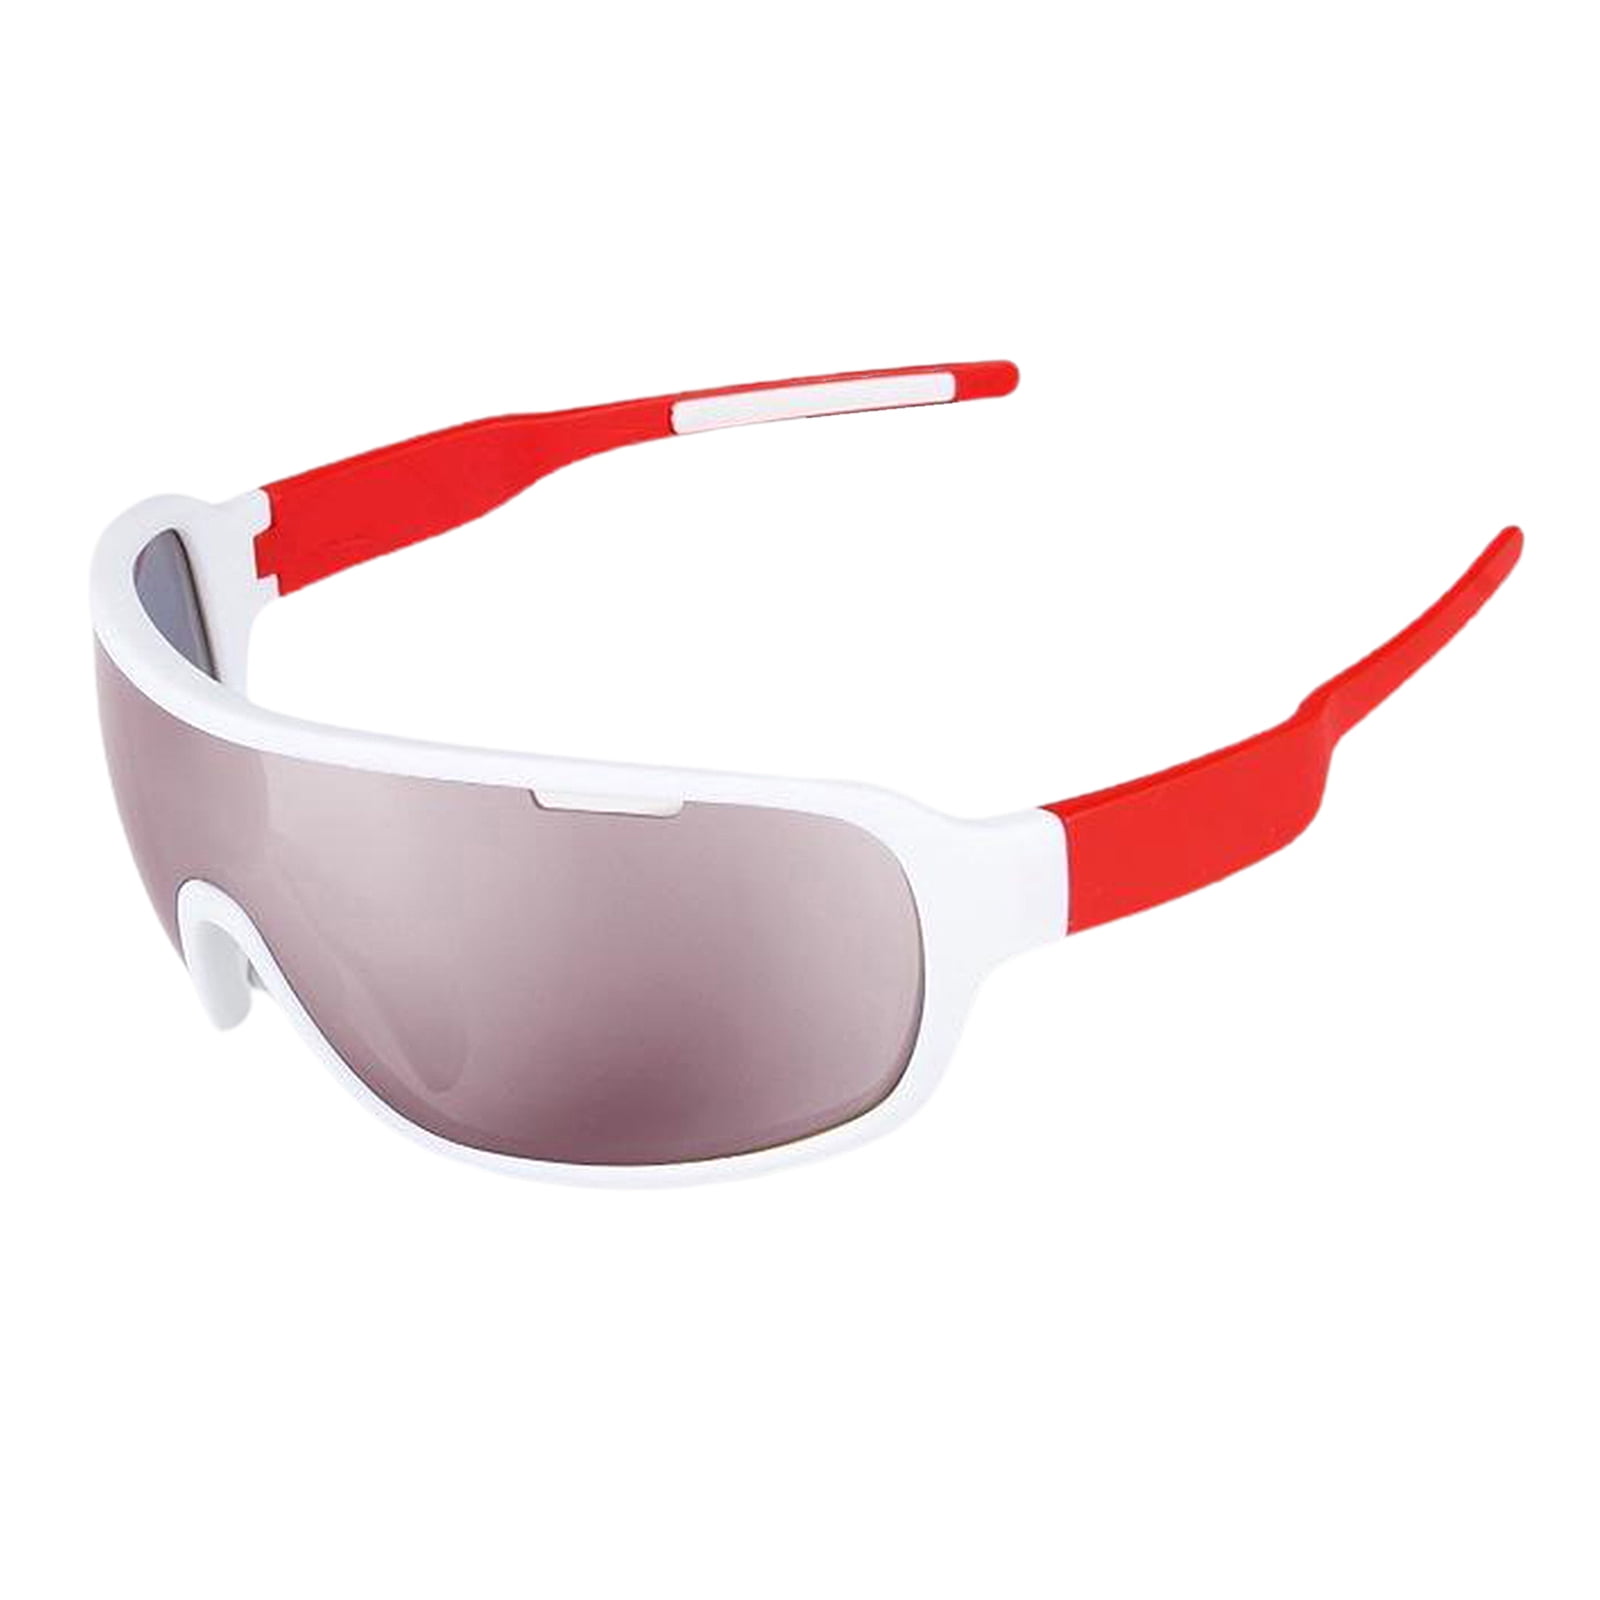 Runworld Sports Sunglasses for Men Women with 5 Interchangeable Lenses Outdoor Sport MTB Cycling Running Driving Baseball Glasses Eyewear UV Protection 